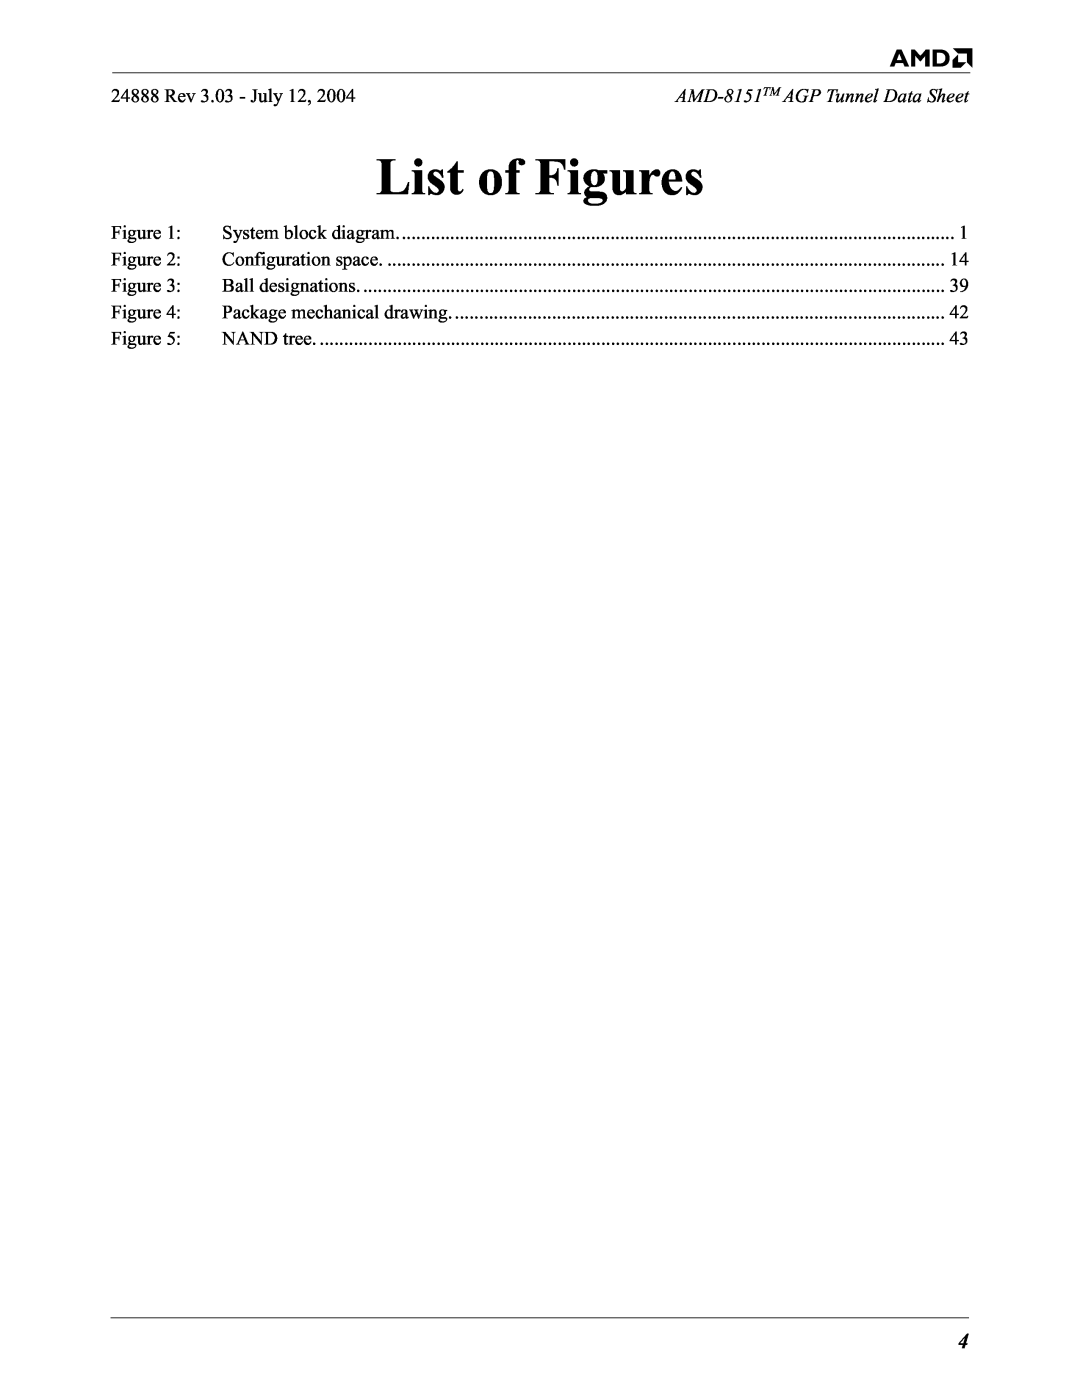 AMD List of Figures, AMD-8151TM AGP Tunnel Data Sheet, System block diagram, Configuration space, Ball designations 